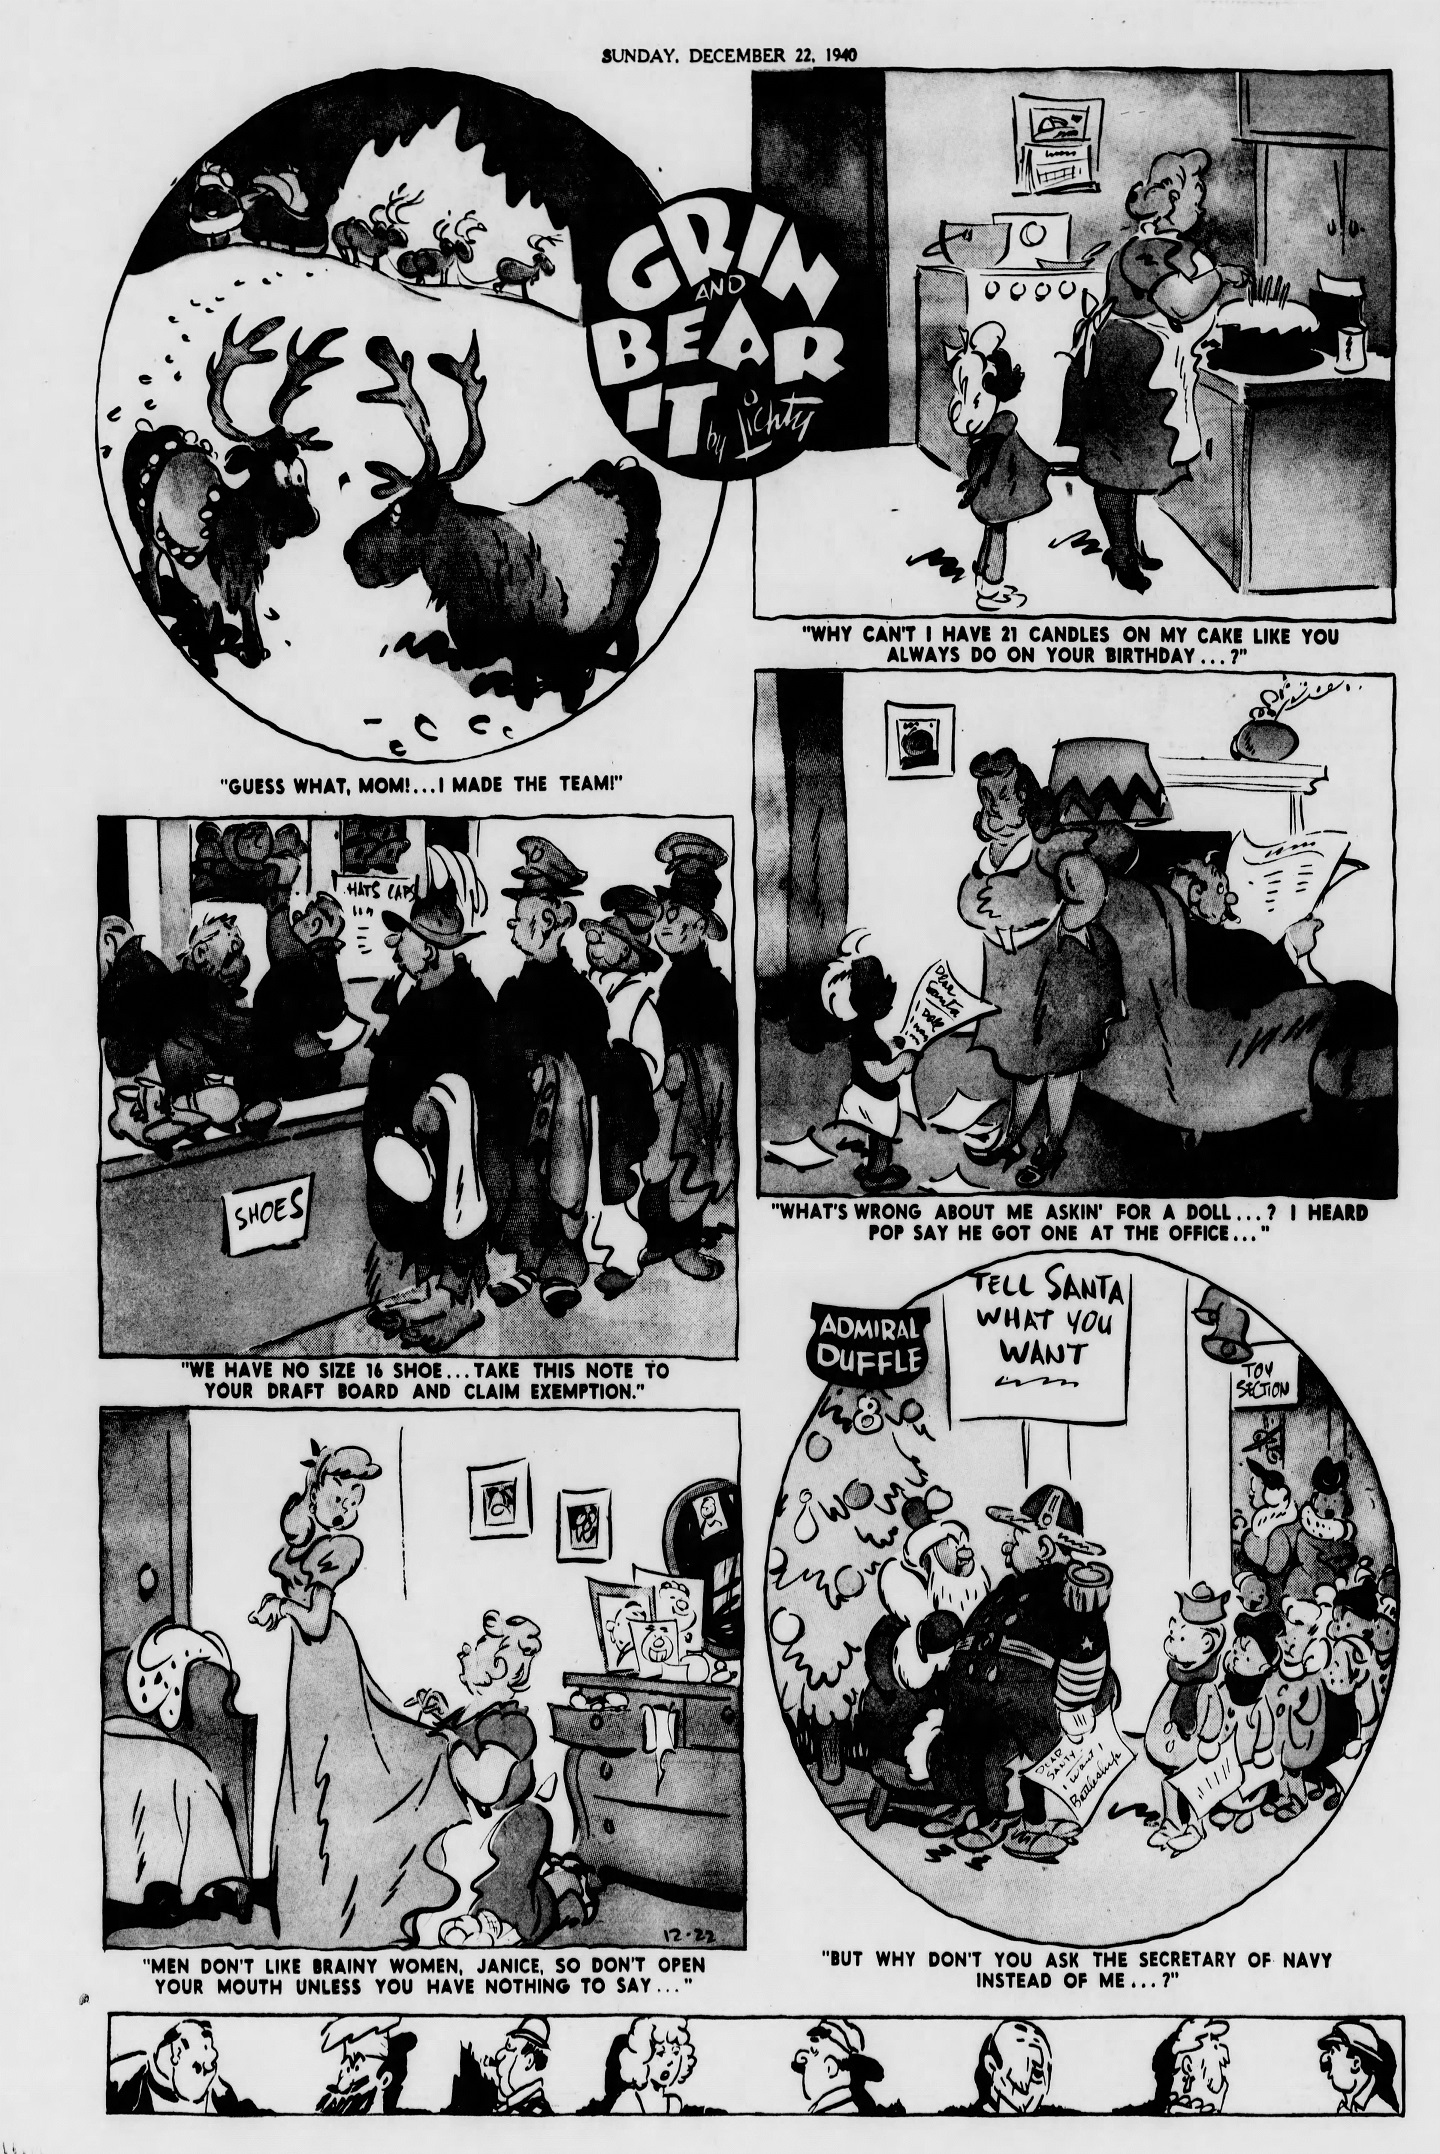 The_Brooklyn_Daily_Eagle_Sun__Dec_22__1940_(9).jpg